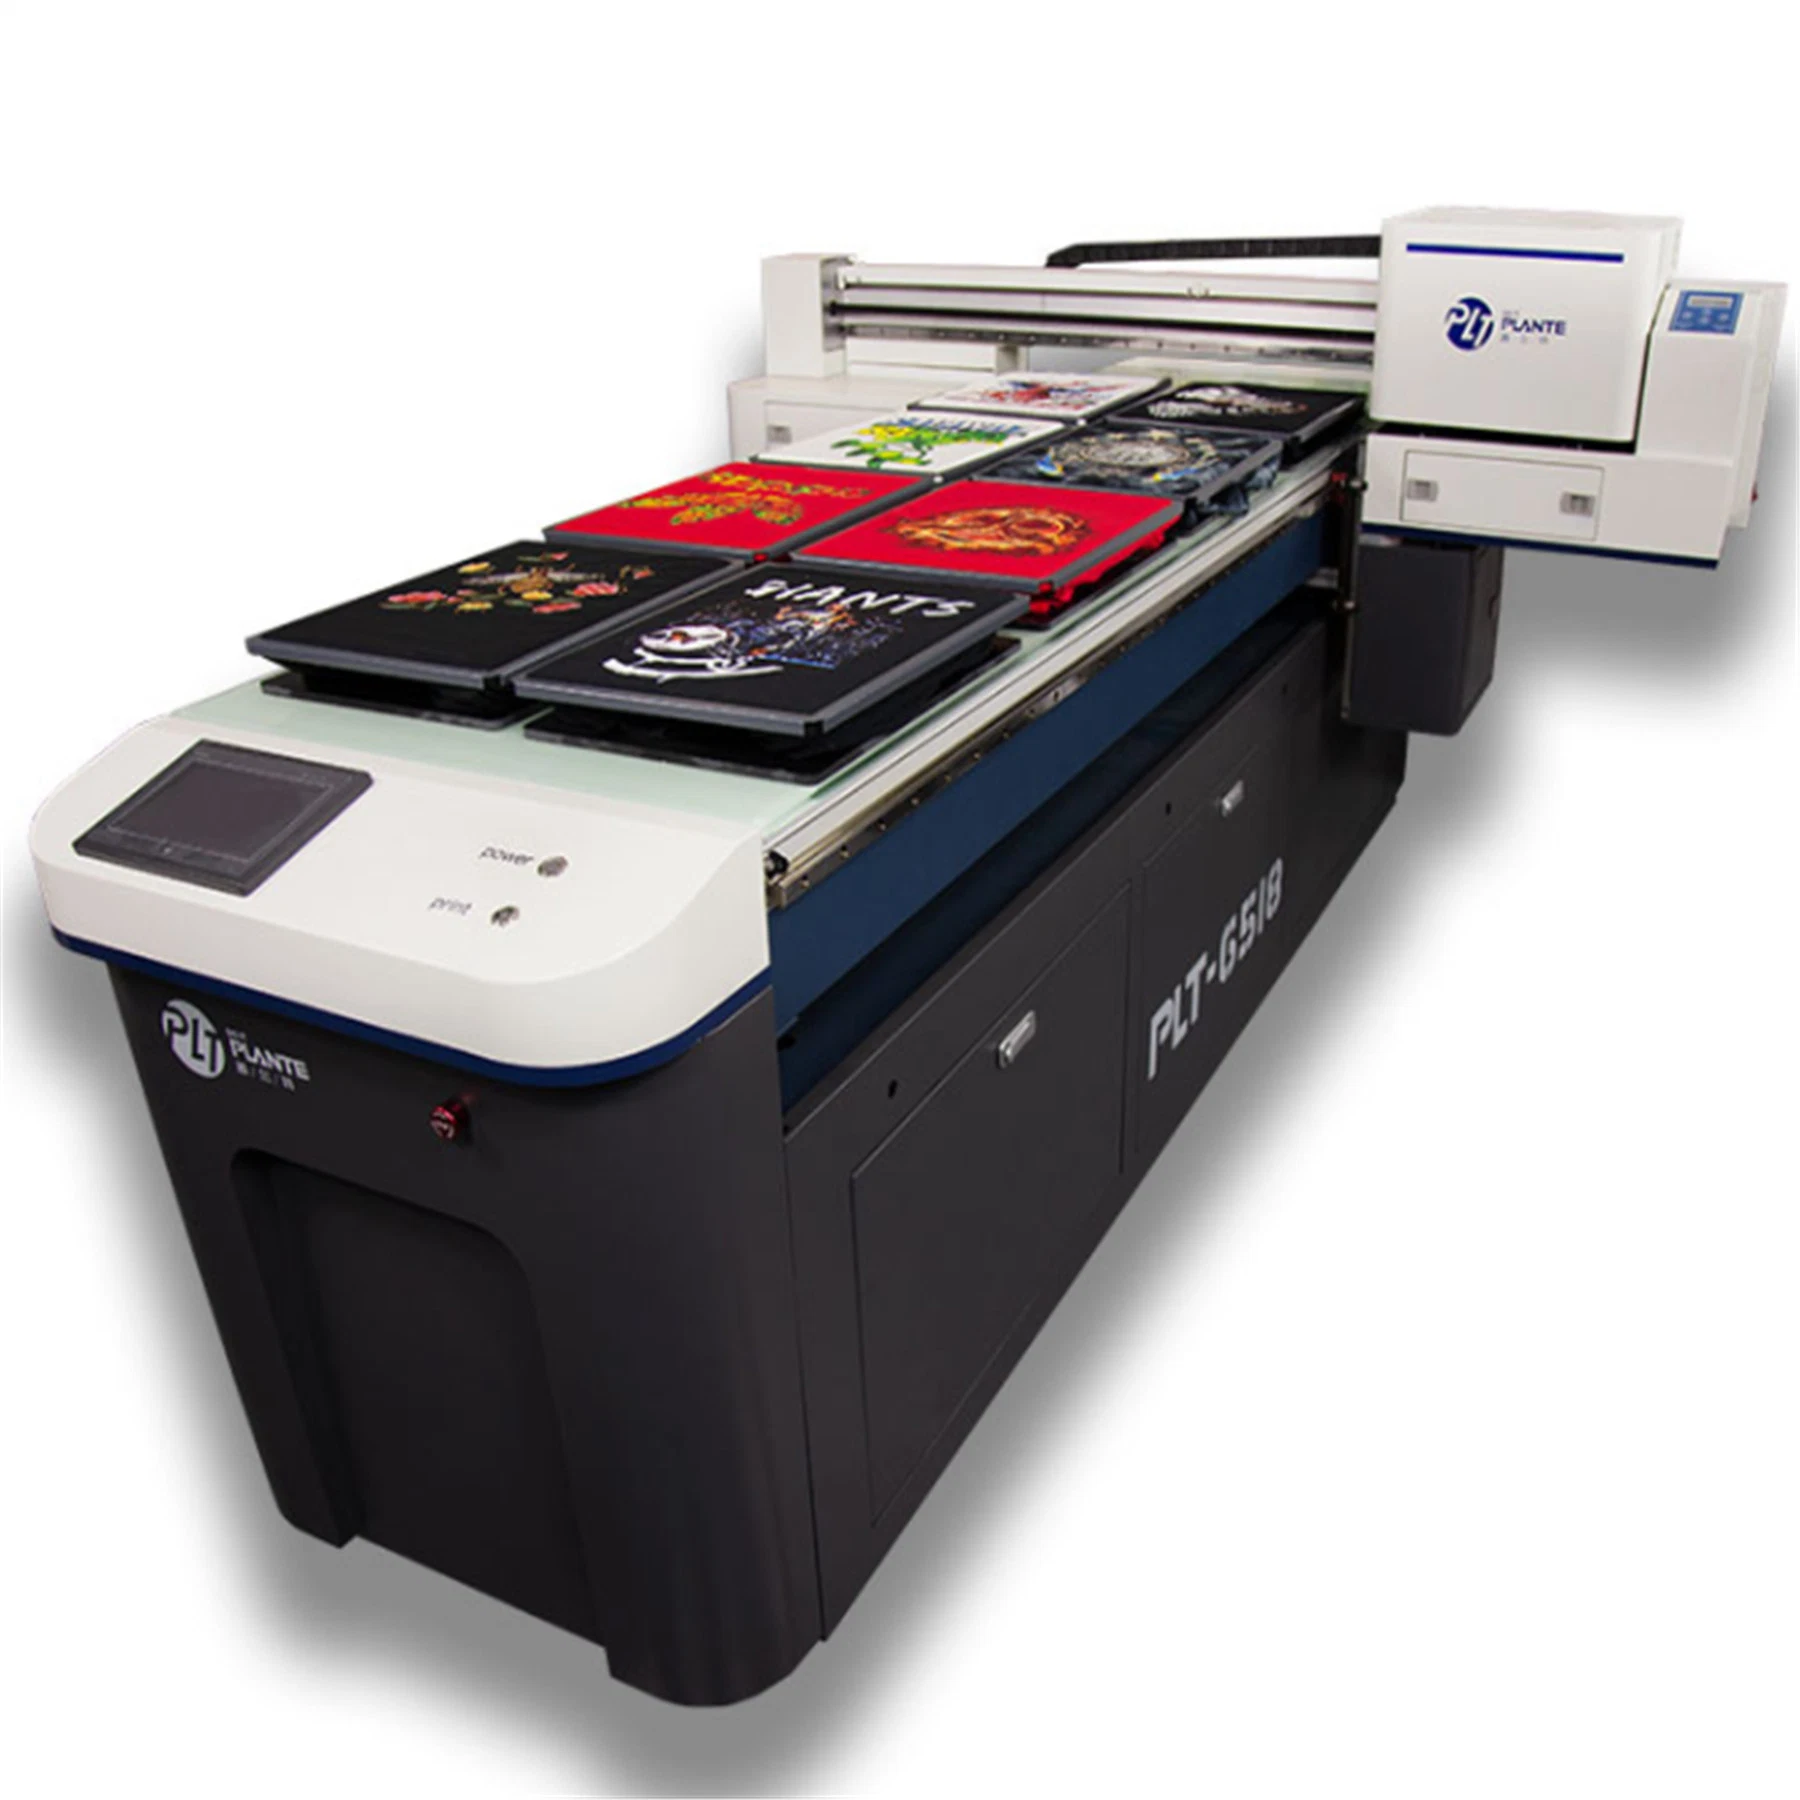 Newest Digital Printing Machine for Sale